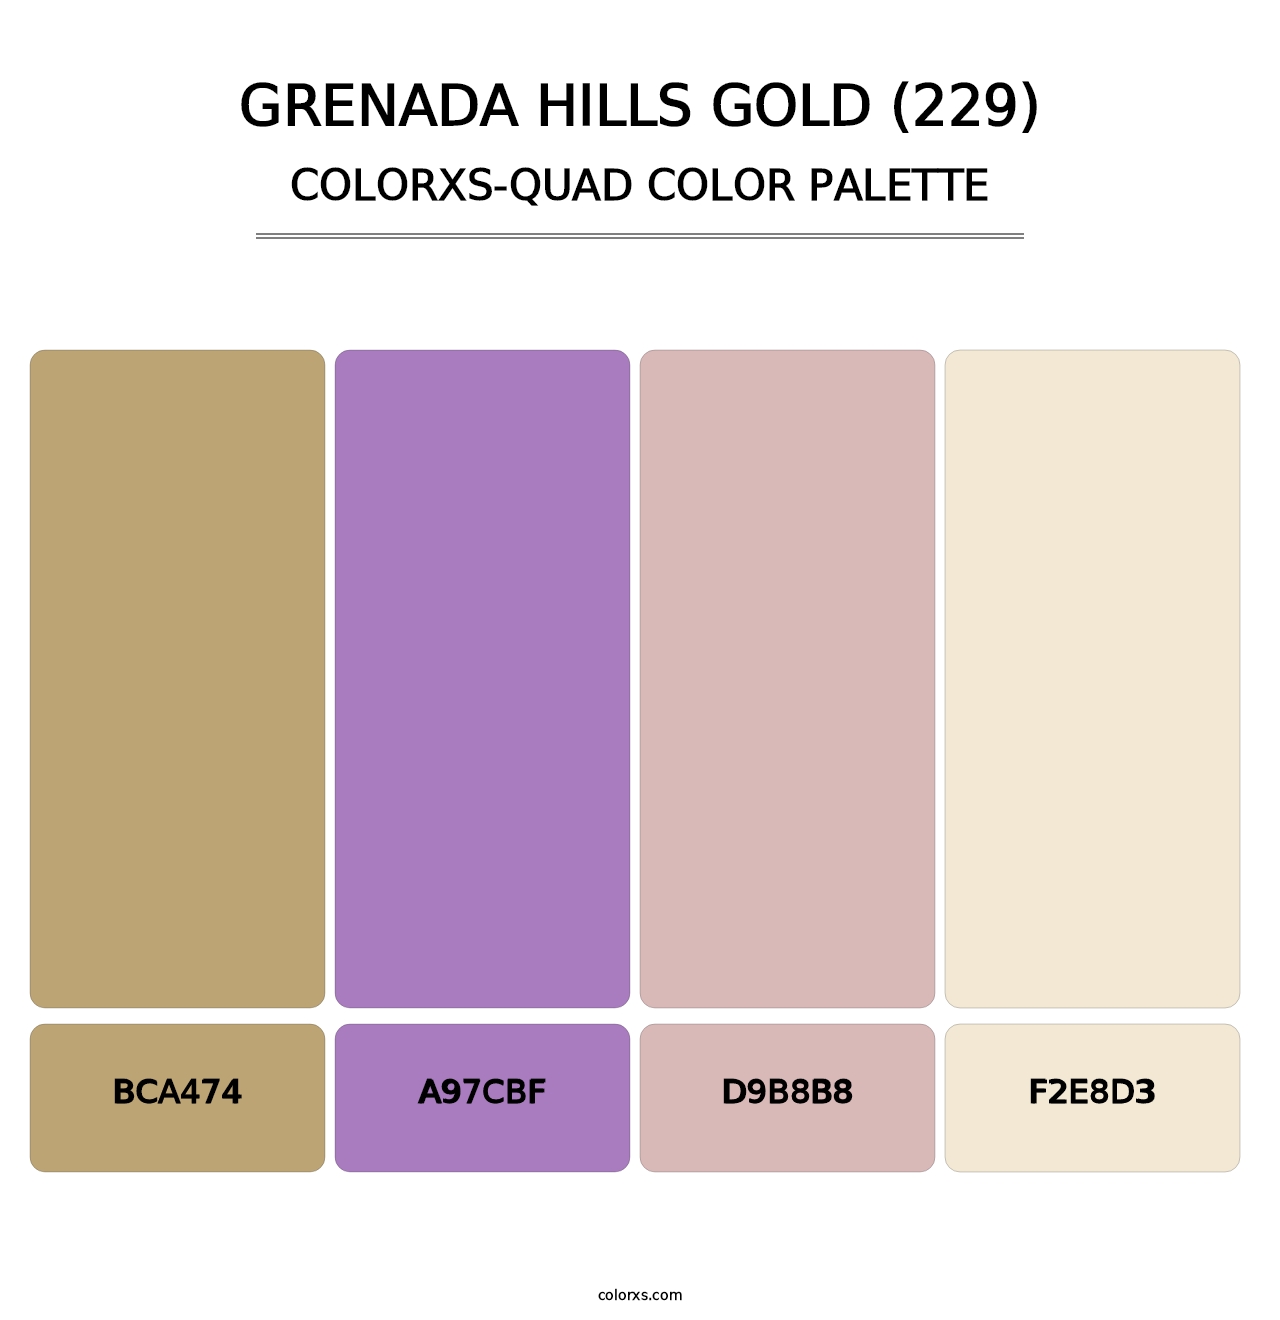 Grenada Hills Gold (229) - Colorxs Quad Palette